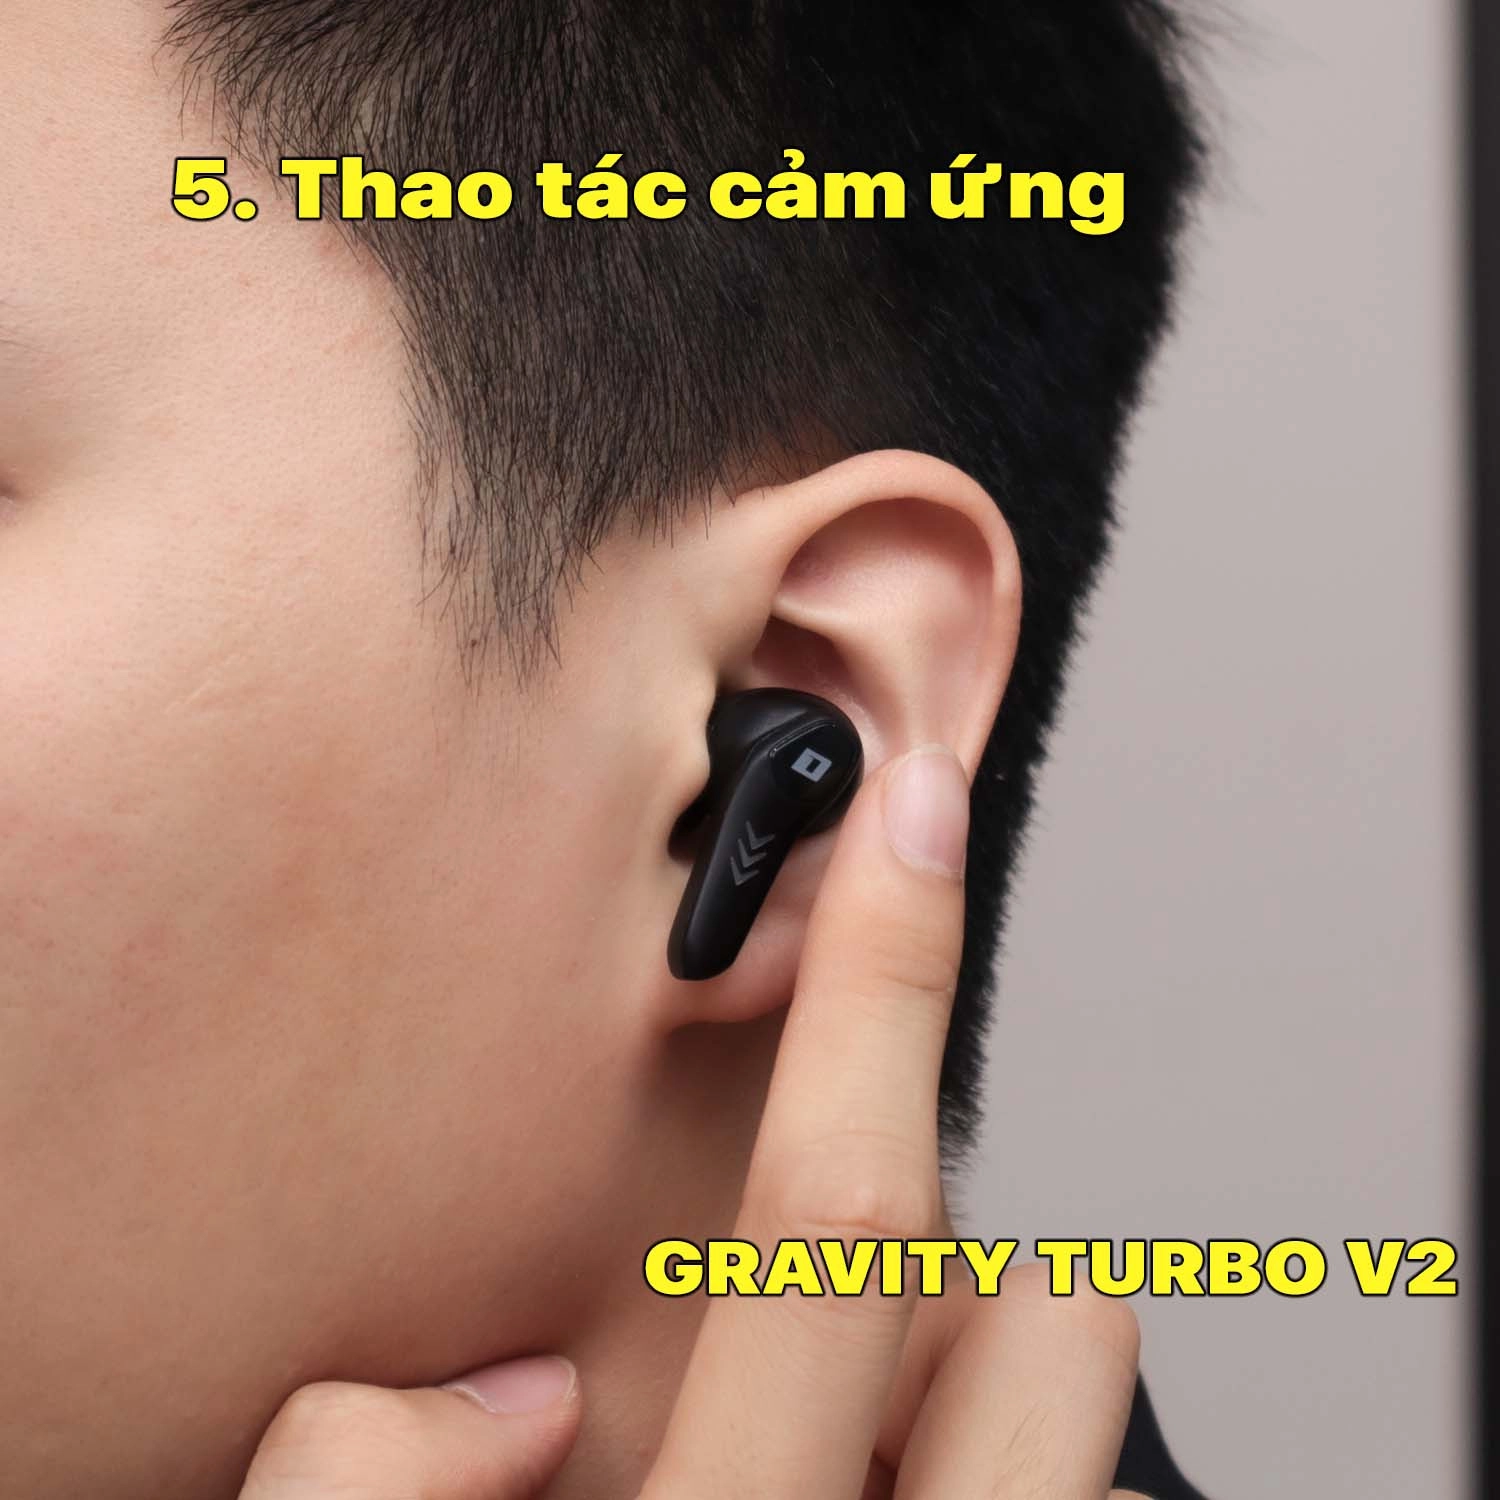 tai-nghe-gravity-turbo-v2-cam-ung-5